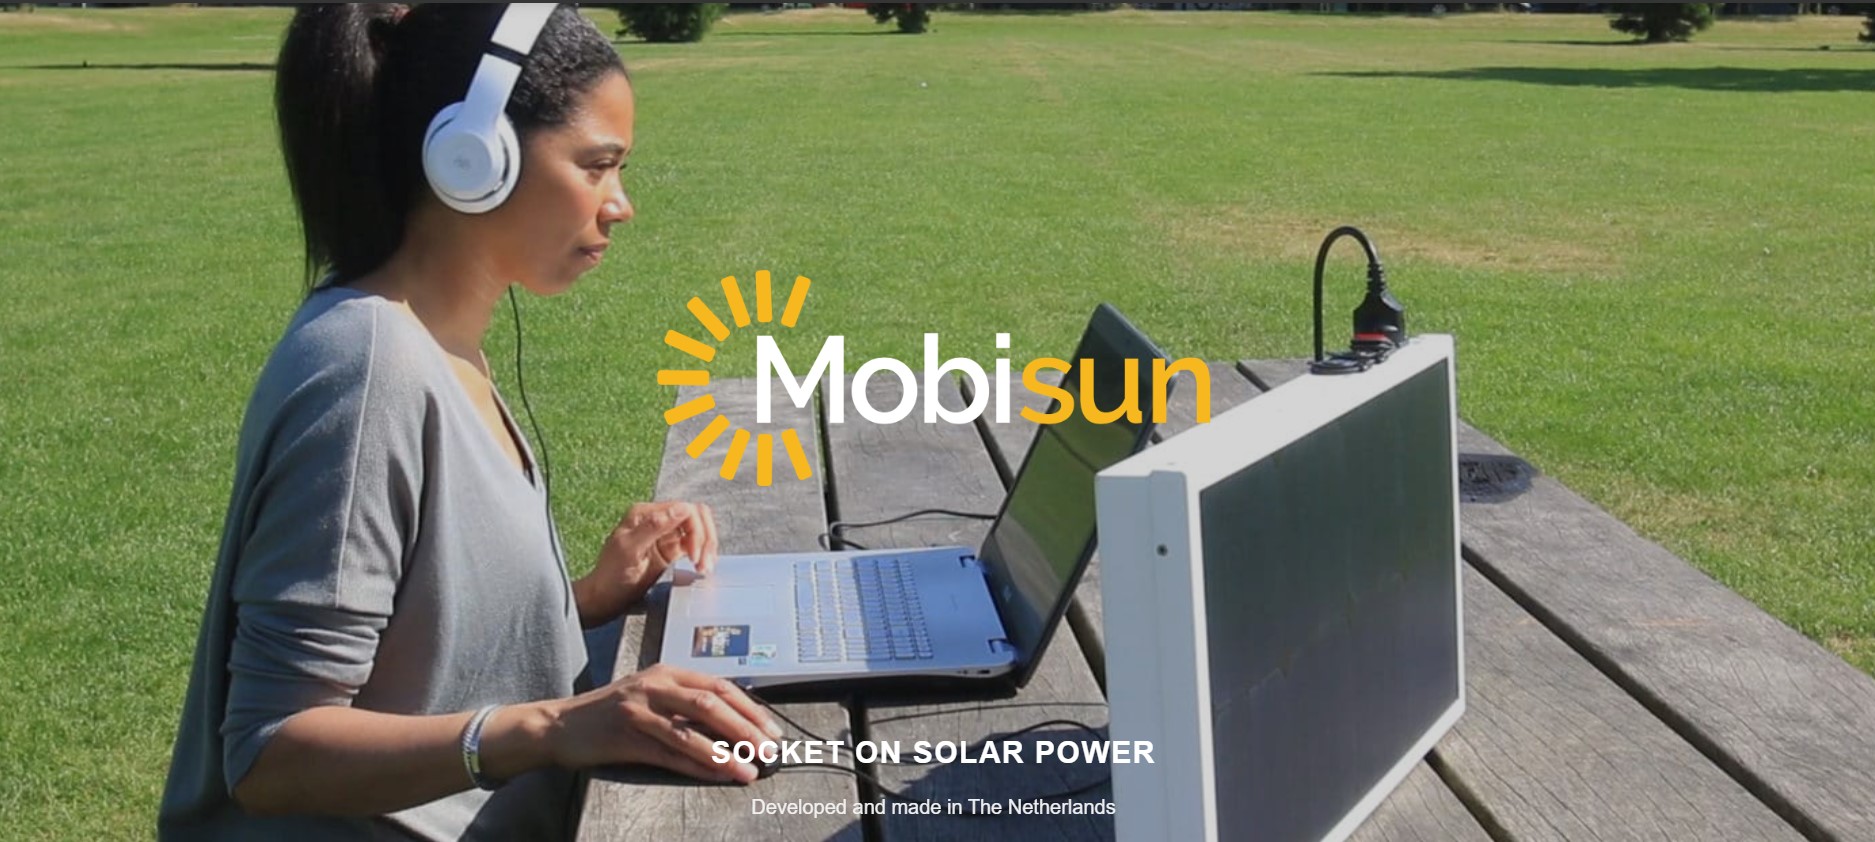 Portable solar panels, power banks and generators | Mobisun International